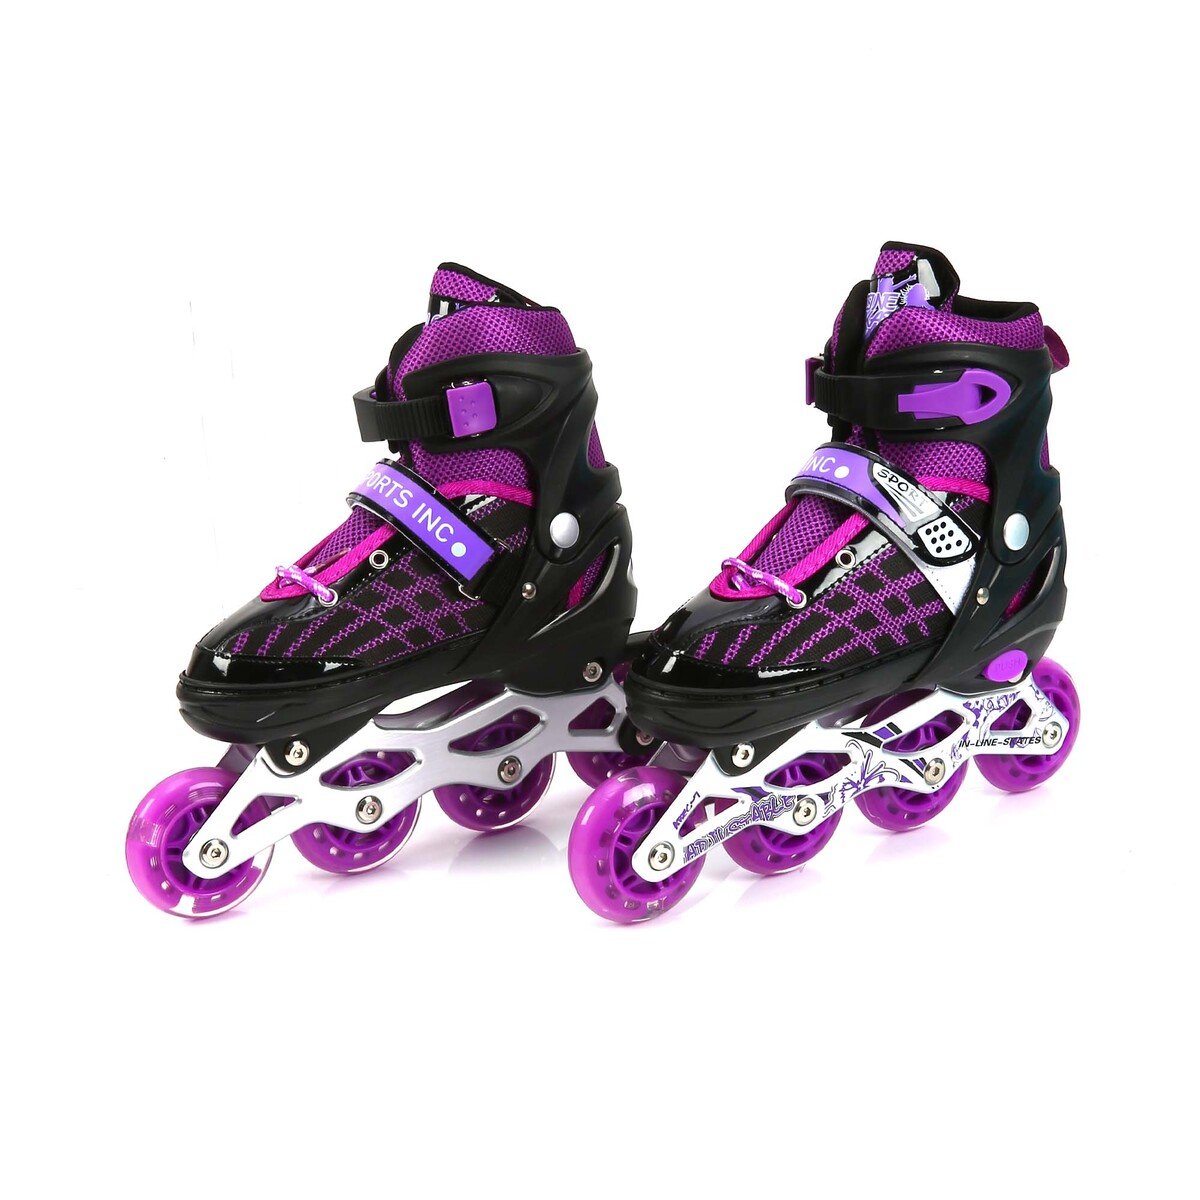 Sports Inc Inline Skate Shoe Kids Size 39-43 126B Large Assorted Color